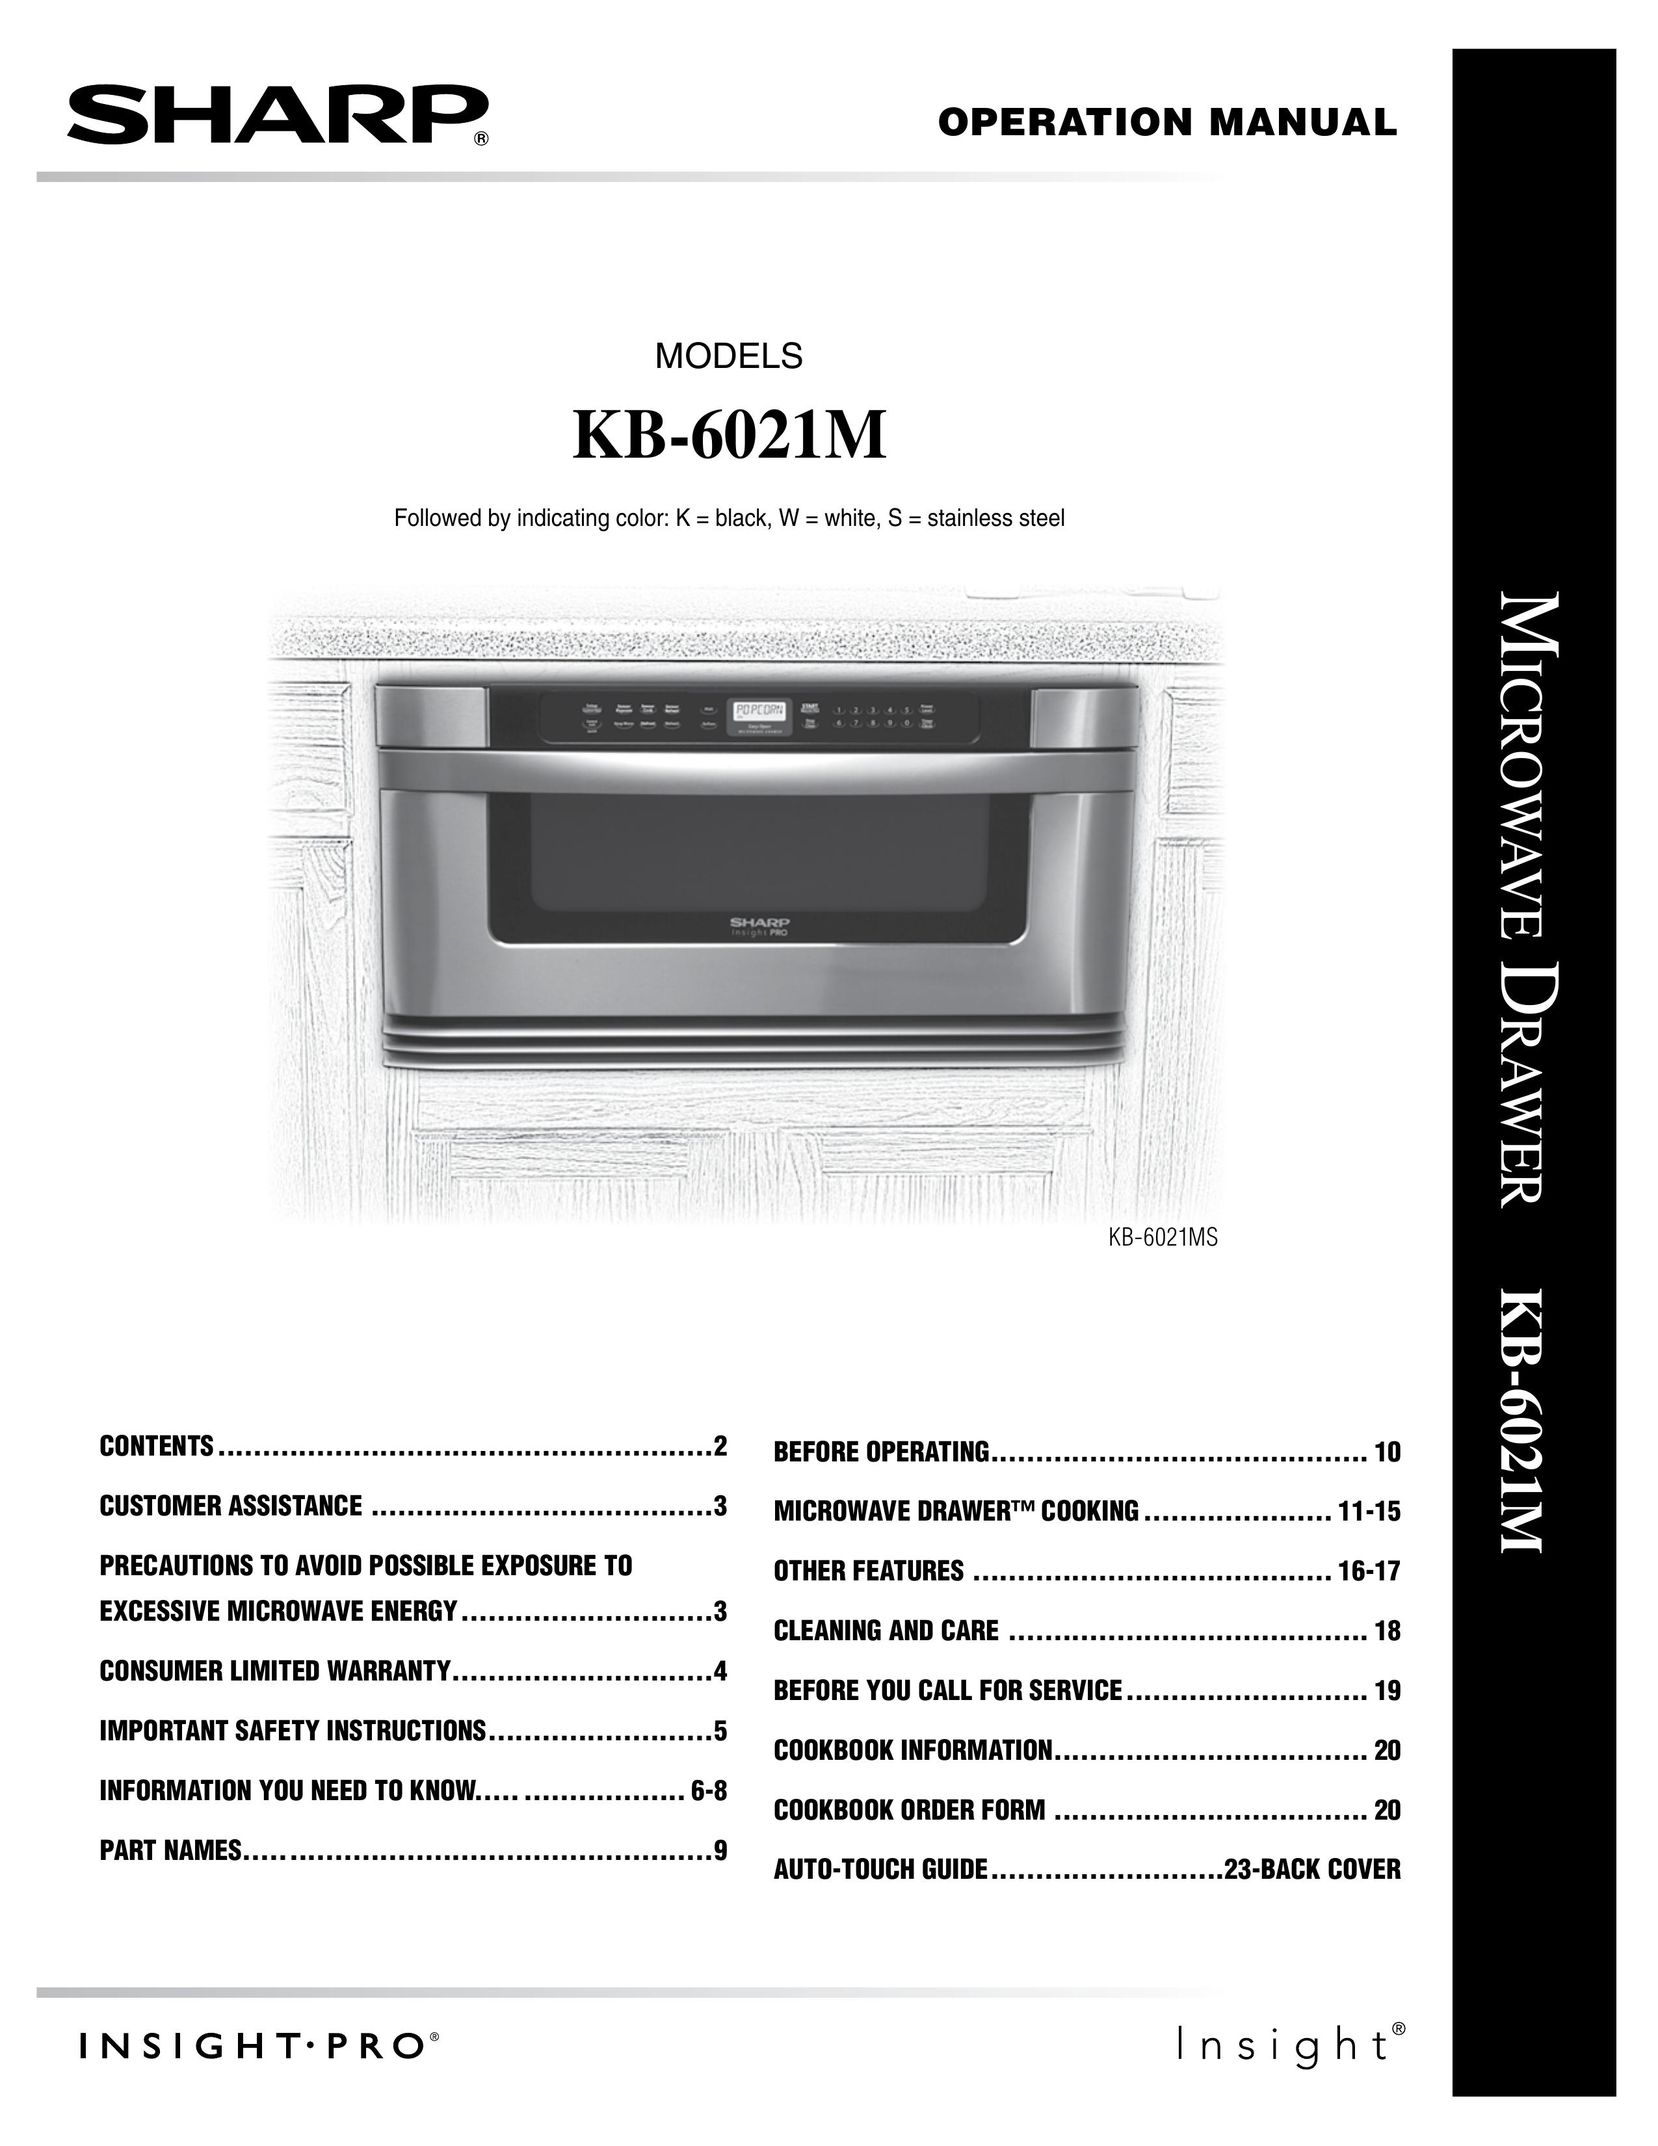 Sharp KB-6021M Microwave Oven User Manual